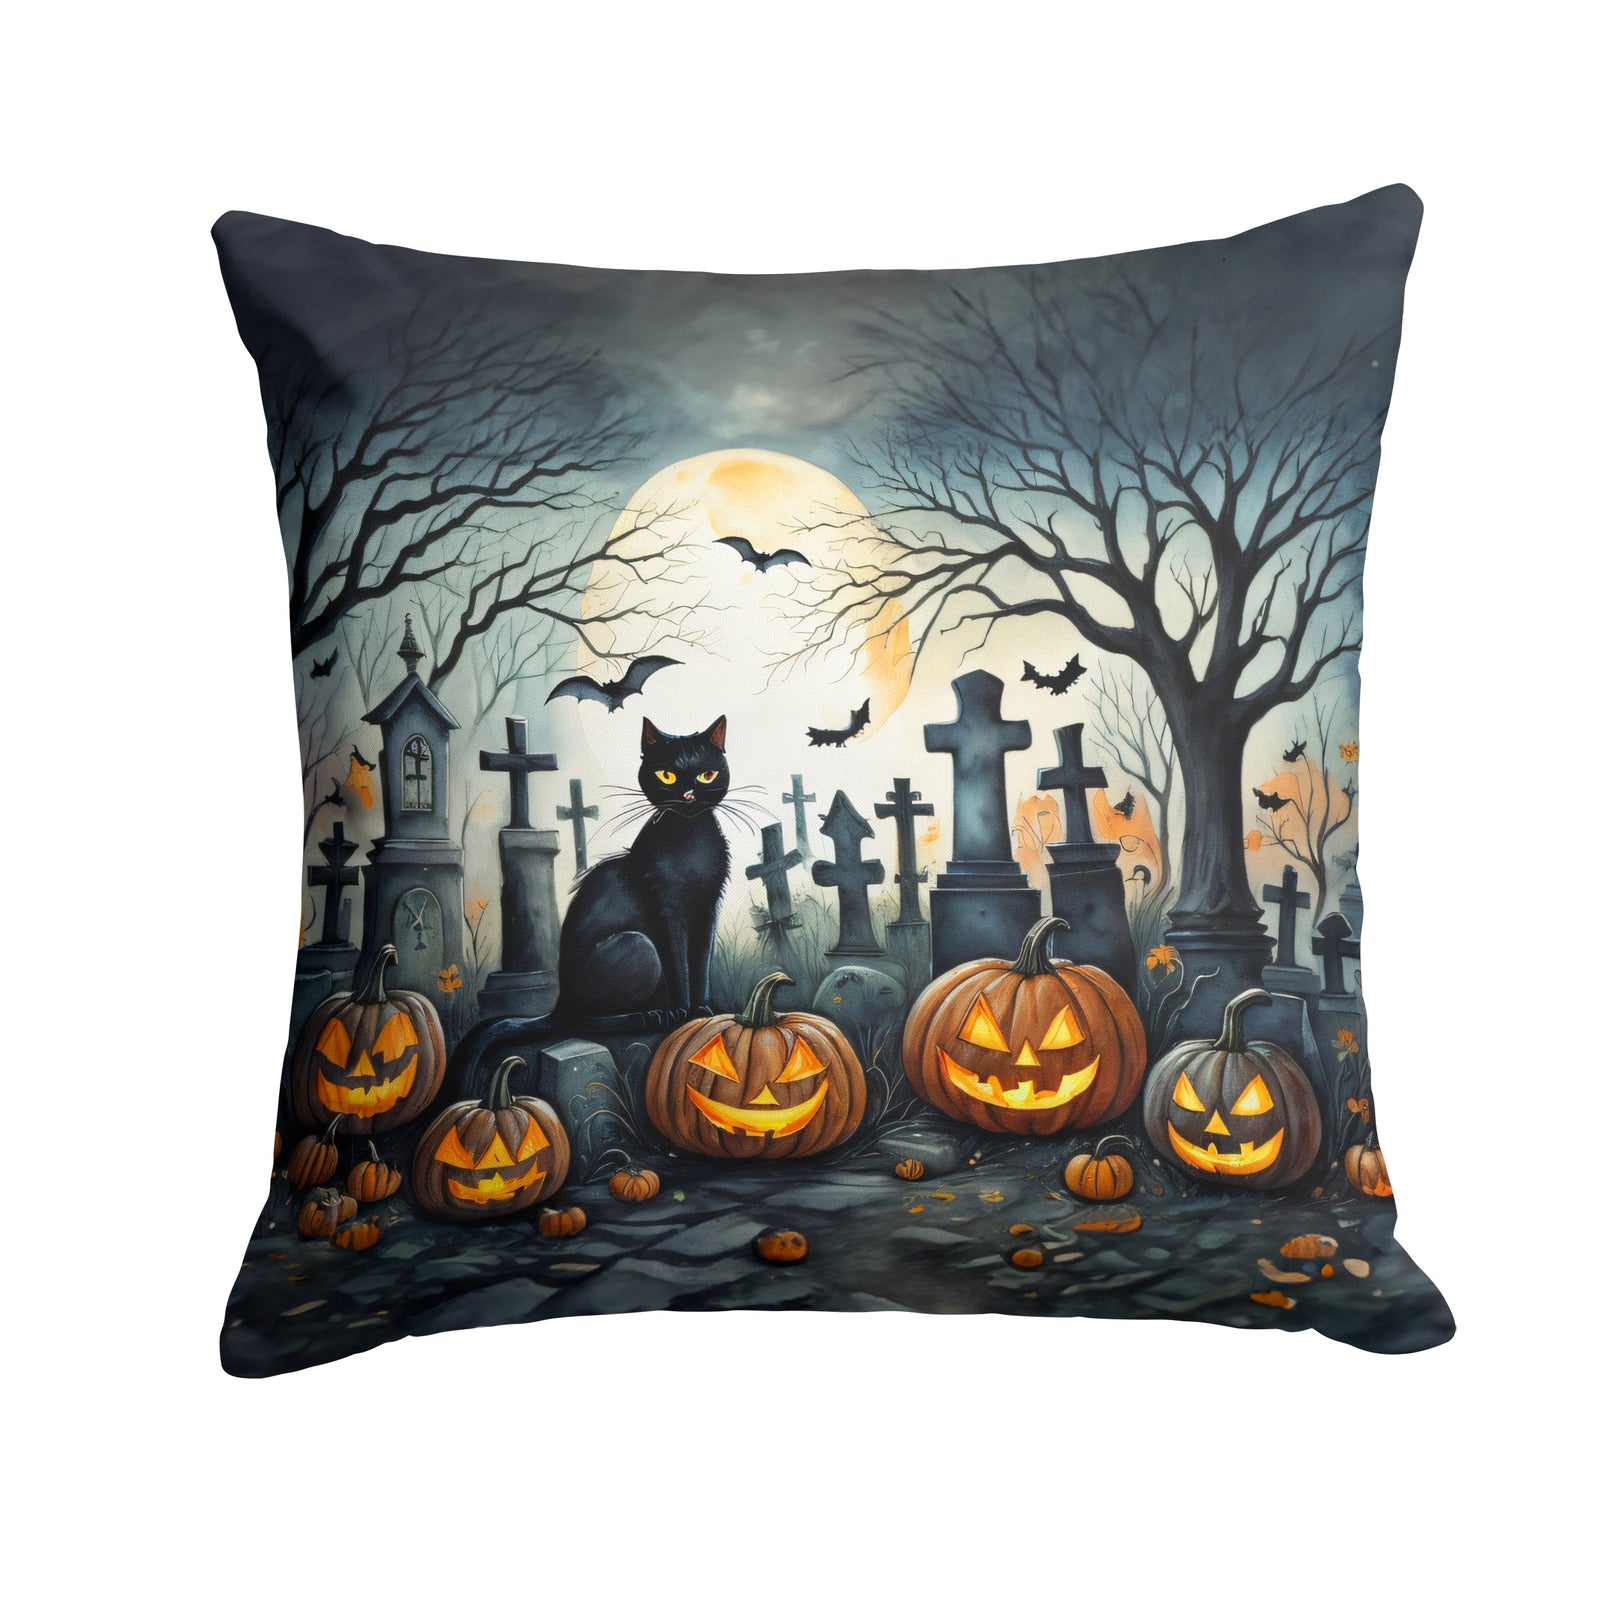 Buy this Black Cat Spooky Halloween Fabric Decorative Pillow